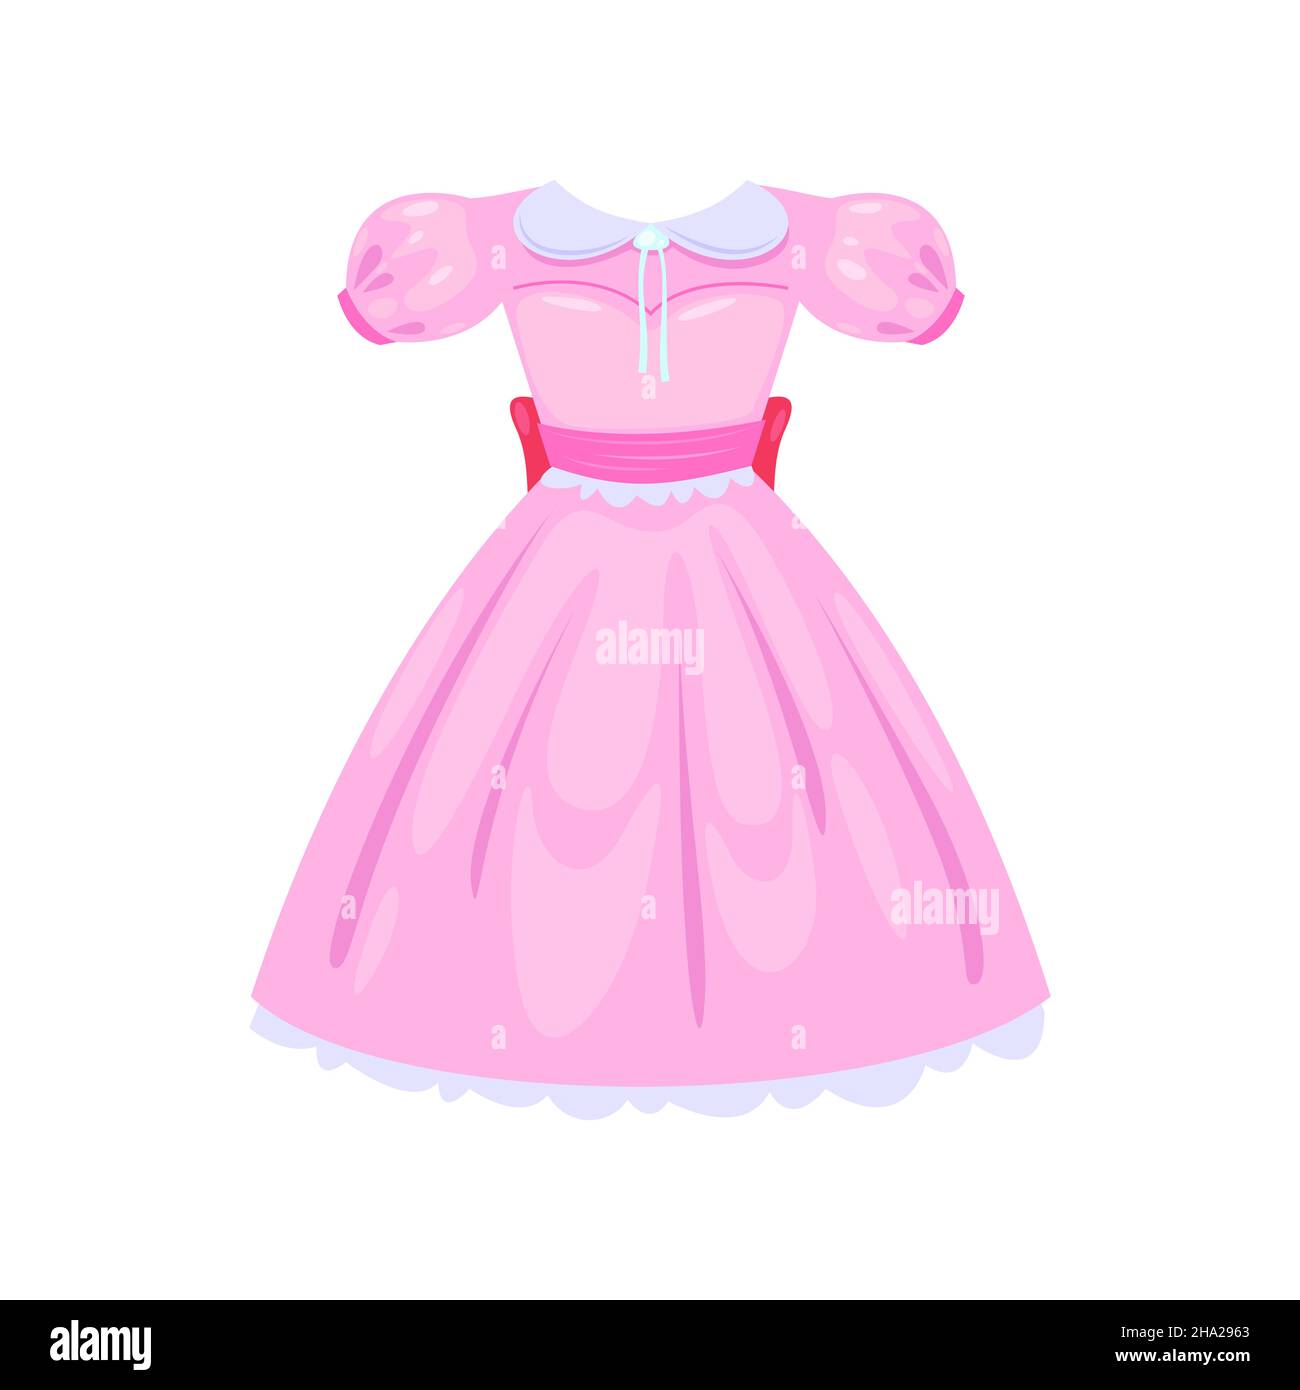 Cartoon pink dress